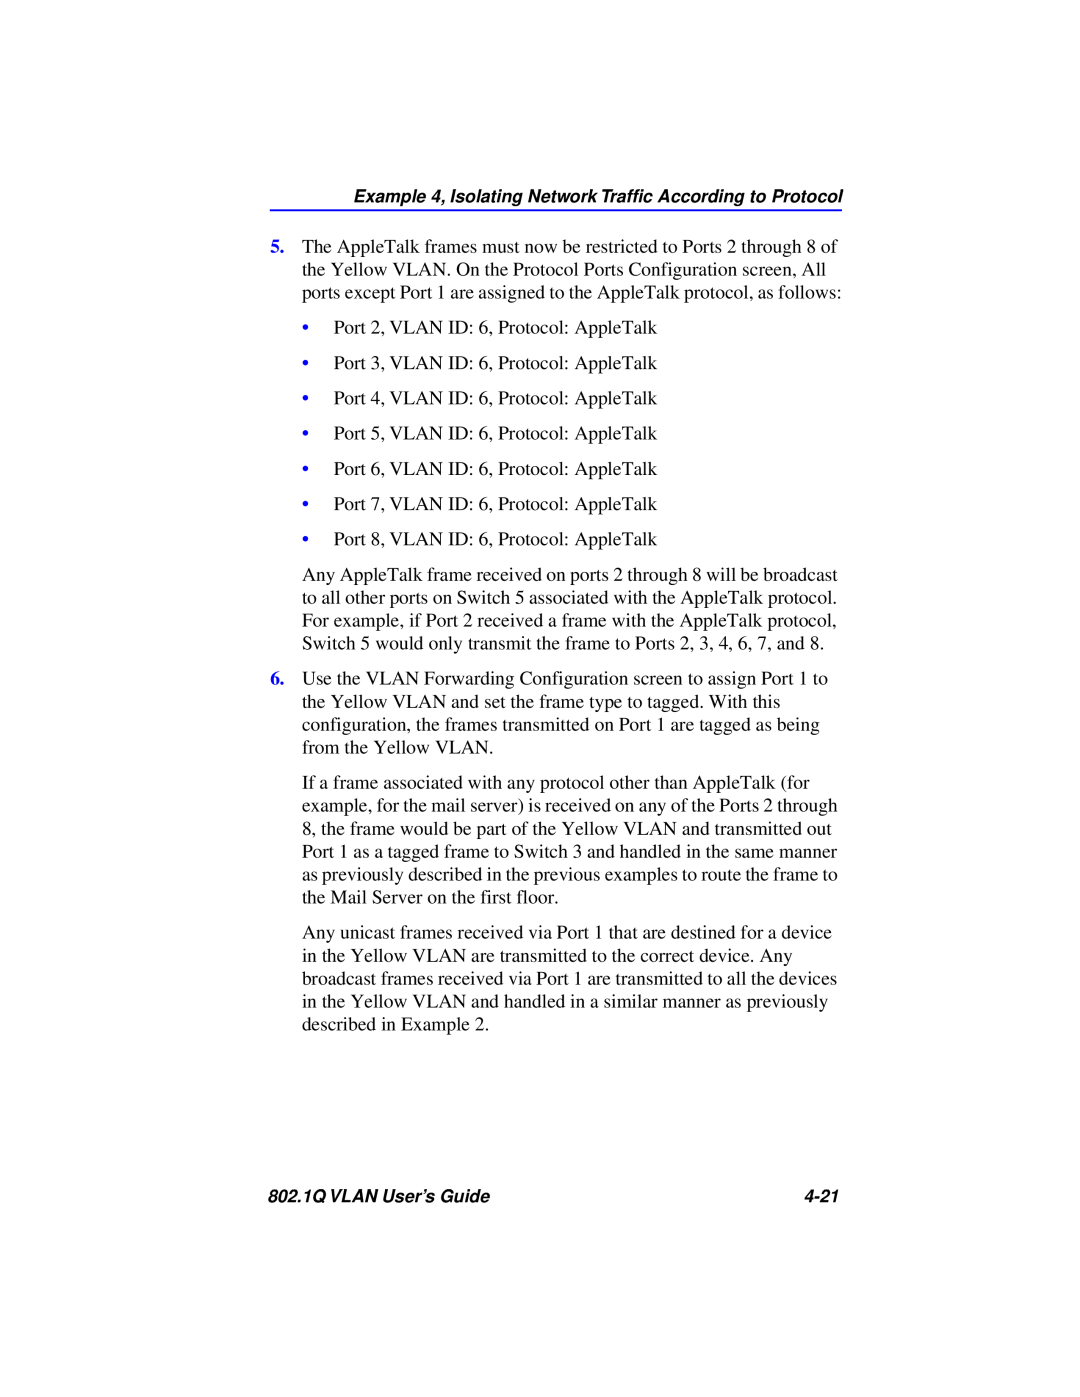 Cabletron Systems 802.1Q manual Port 2, VLAN ID 6, Protocol AppleTalk 